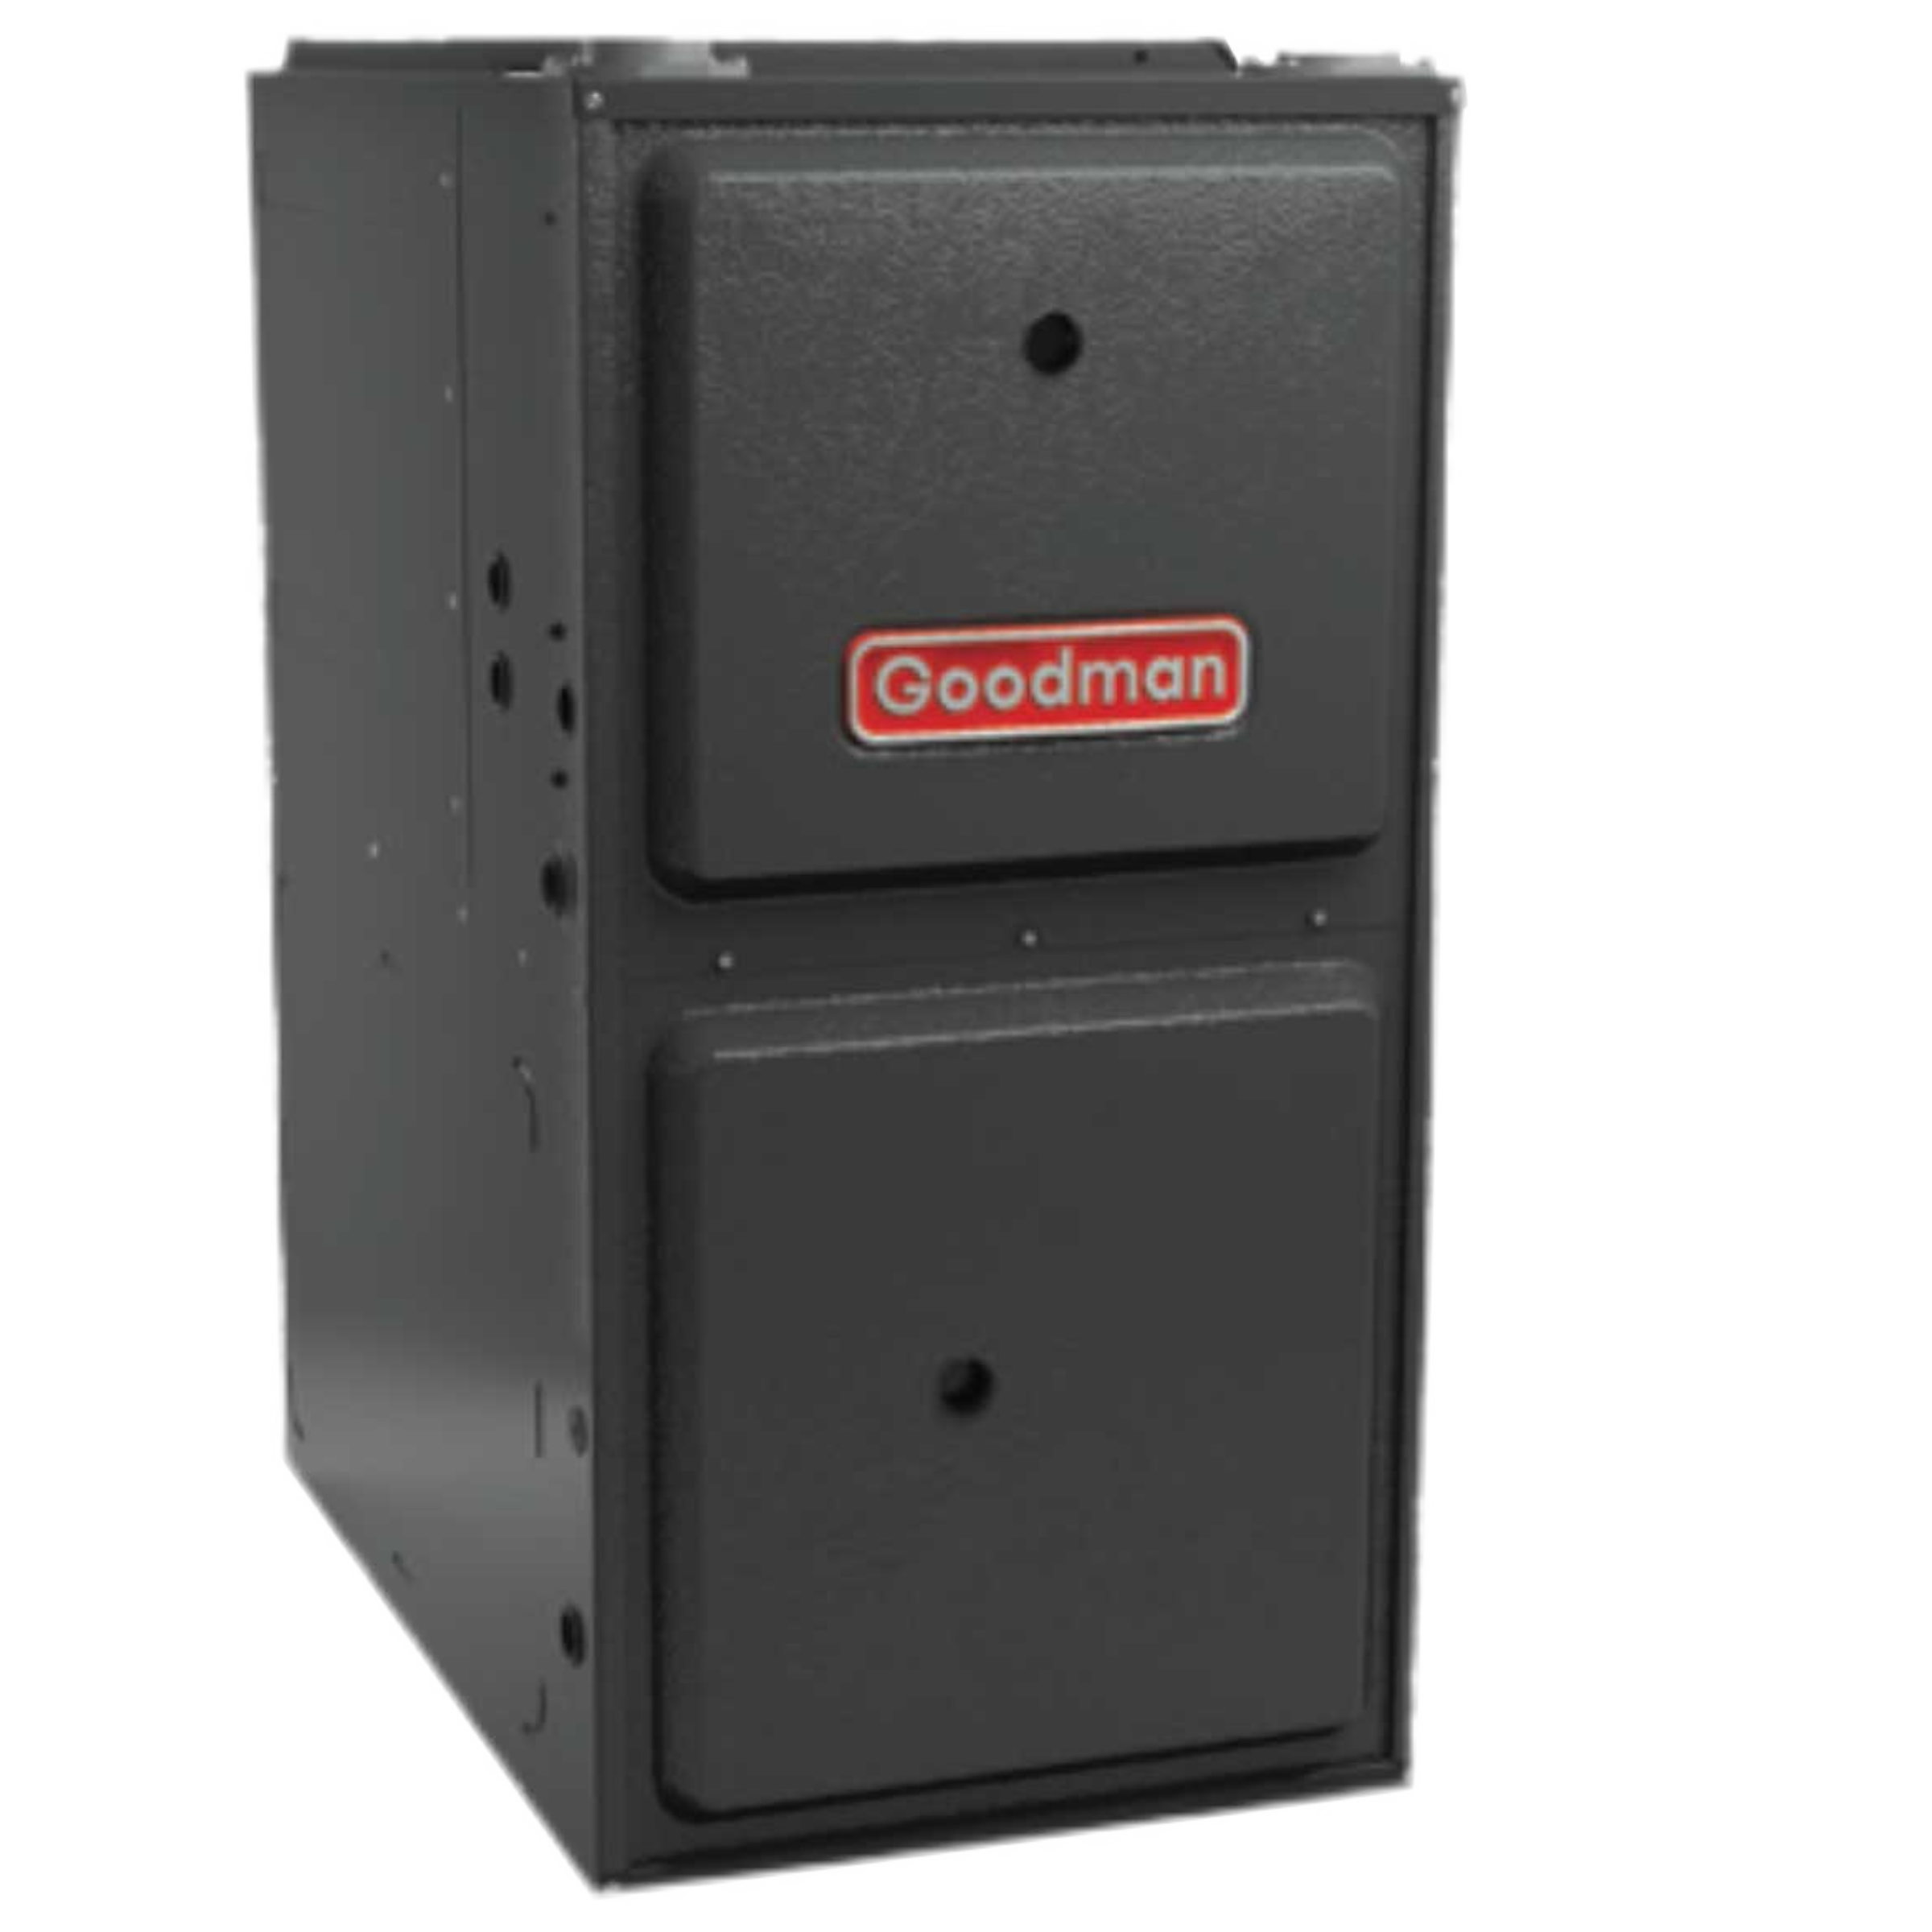 GMVC96 Goodman Gas Furnace Series, Upflow/Horizontal, 96% AFUE, Variable Speed ECM/ComfortBridge, Two-Stage Gas Valve